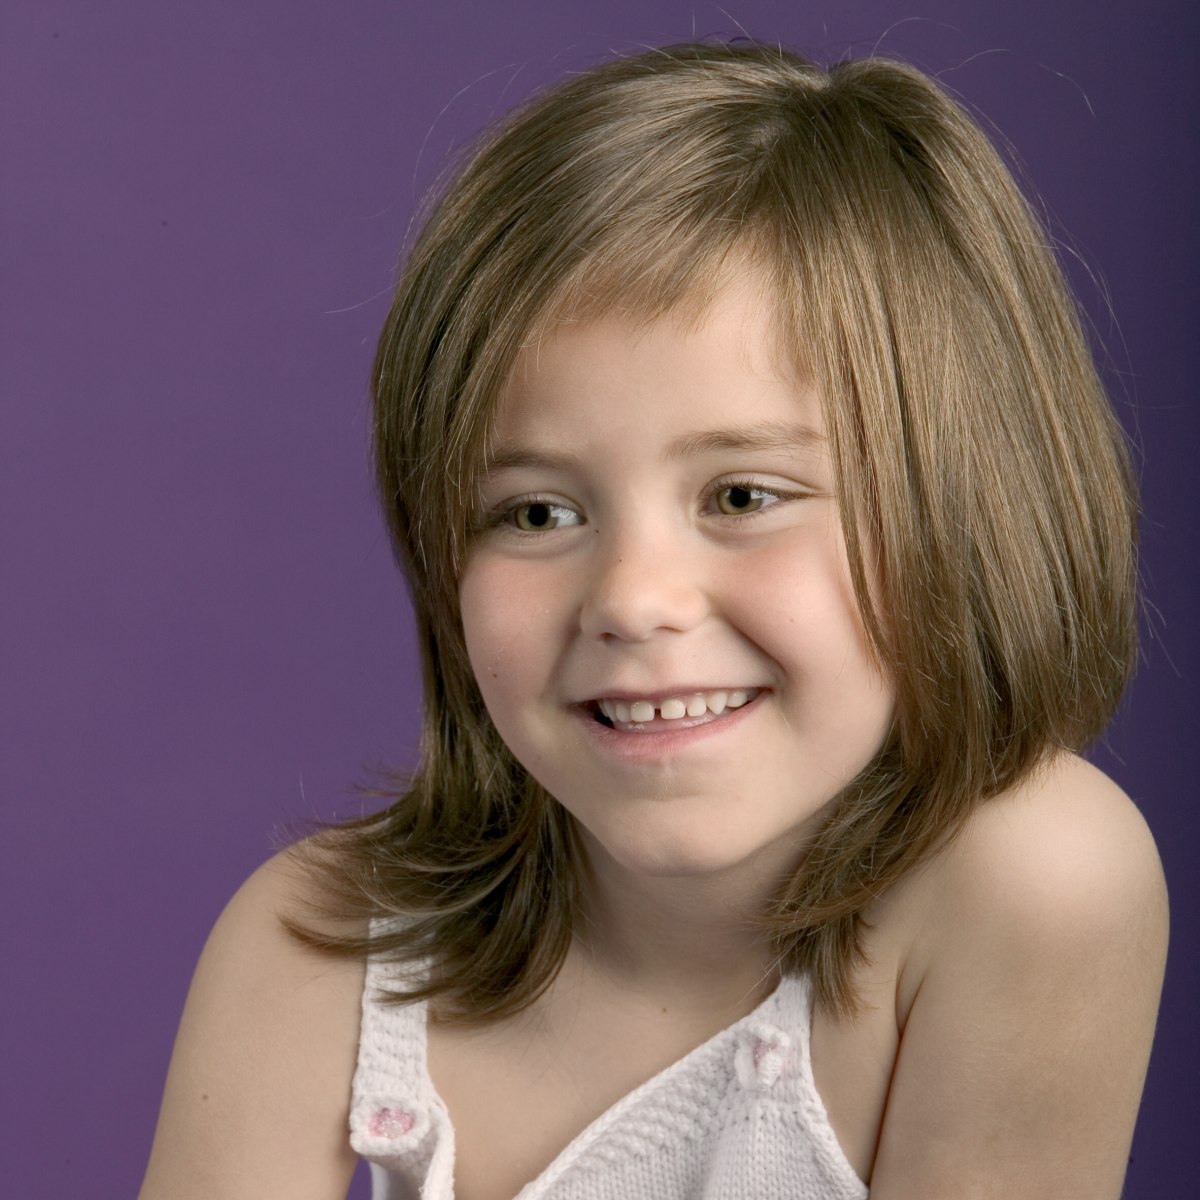 shoulder length hair styles for kids